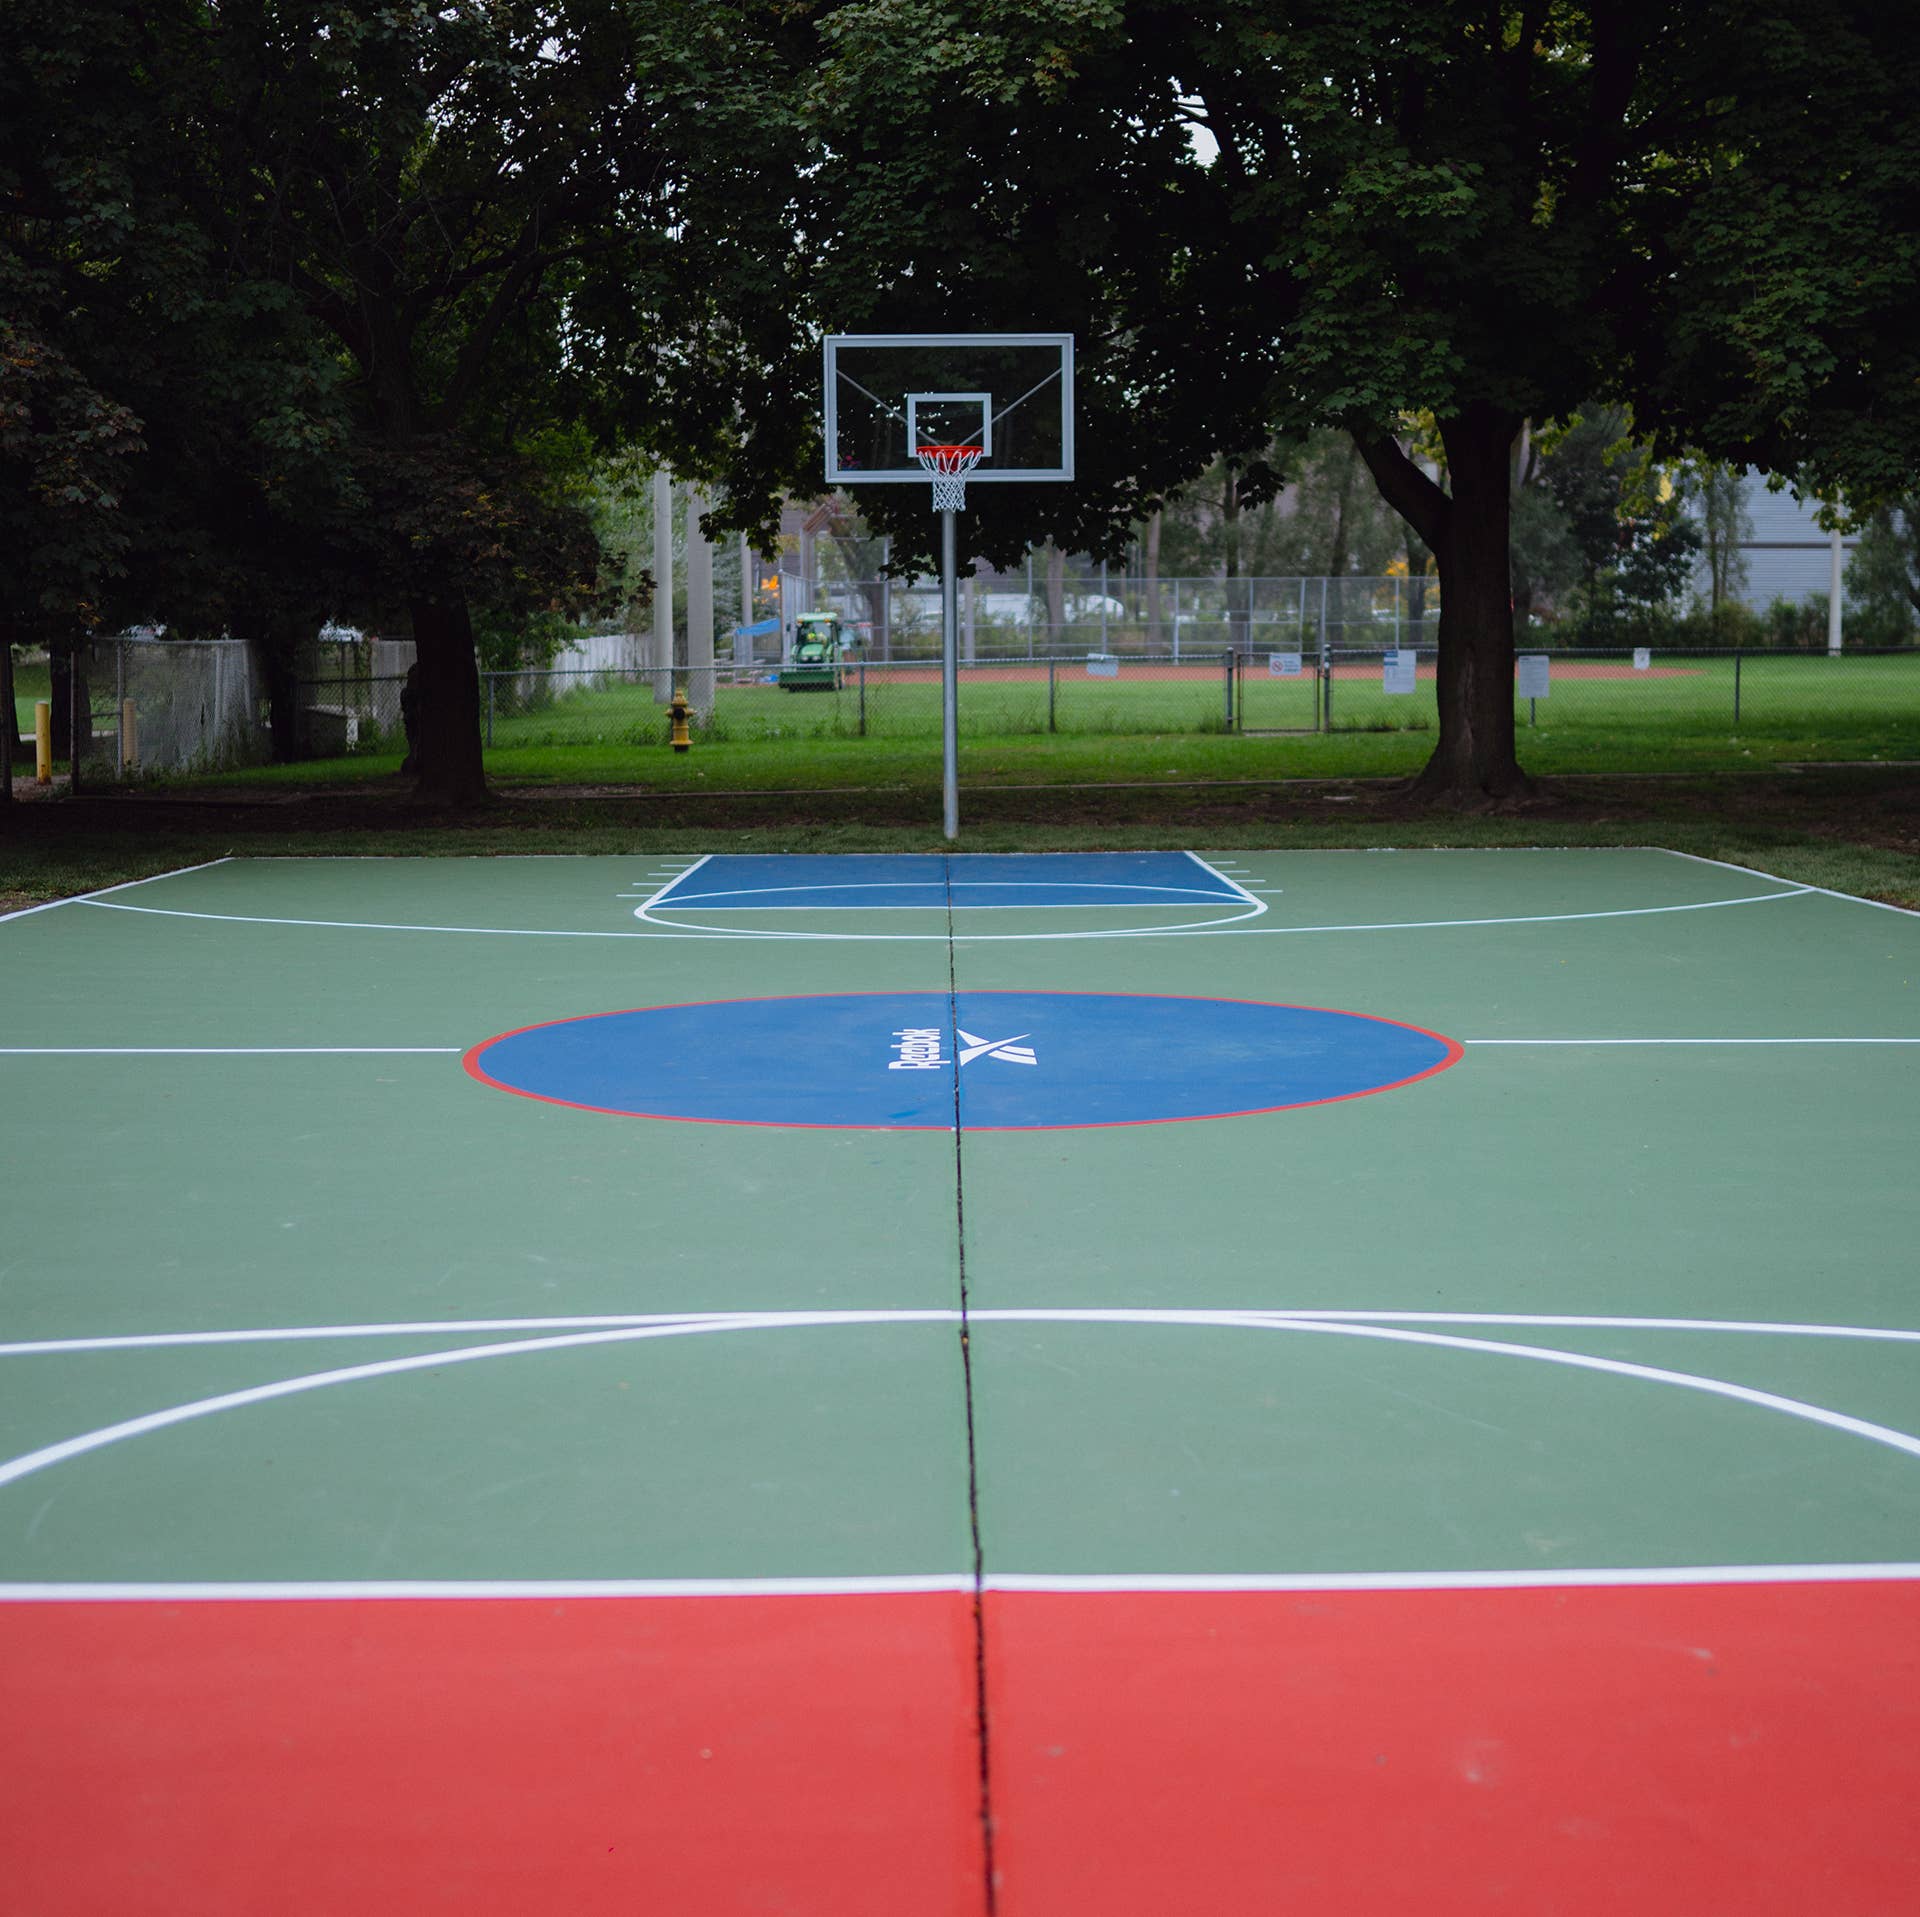 Reeboks new and improved McGregor Park basketball court.